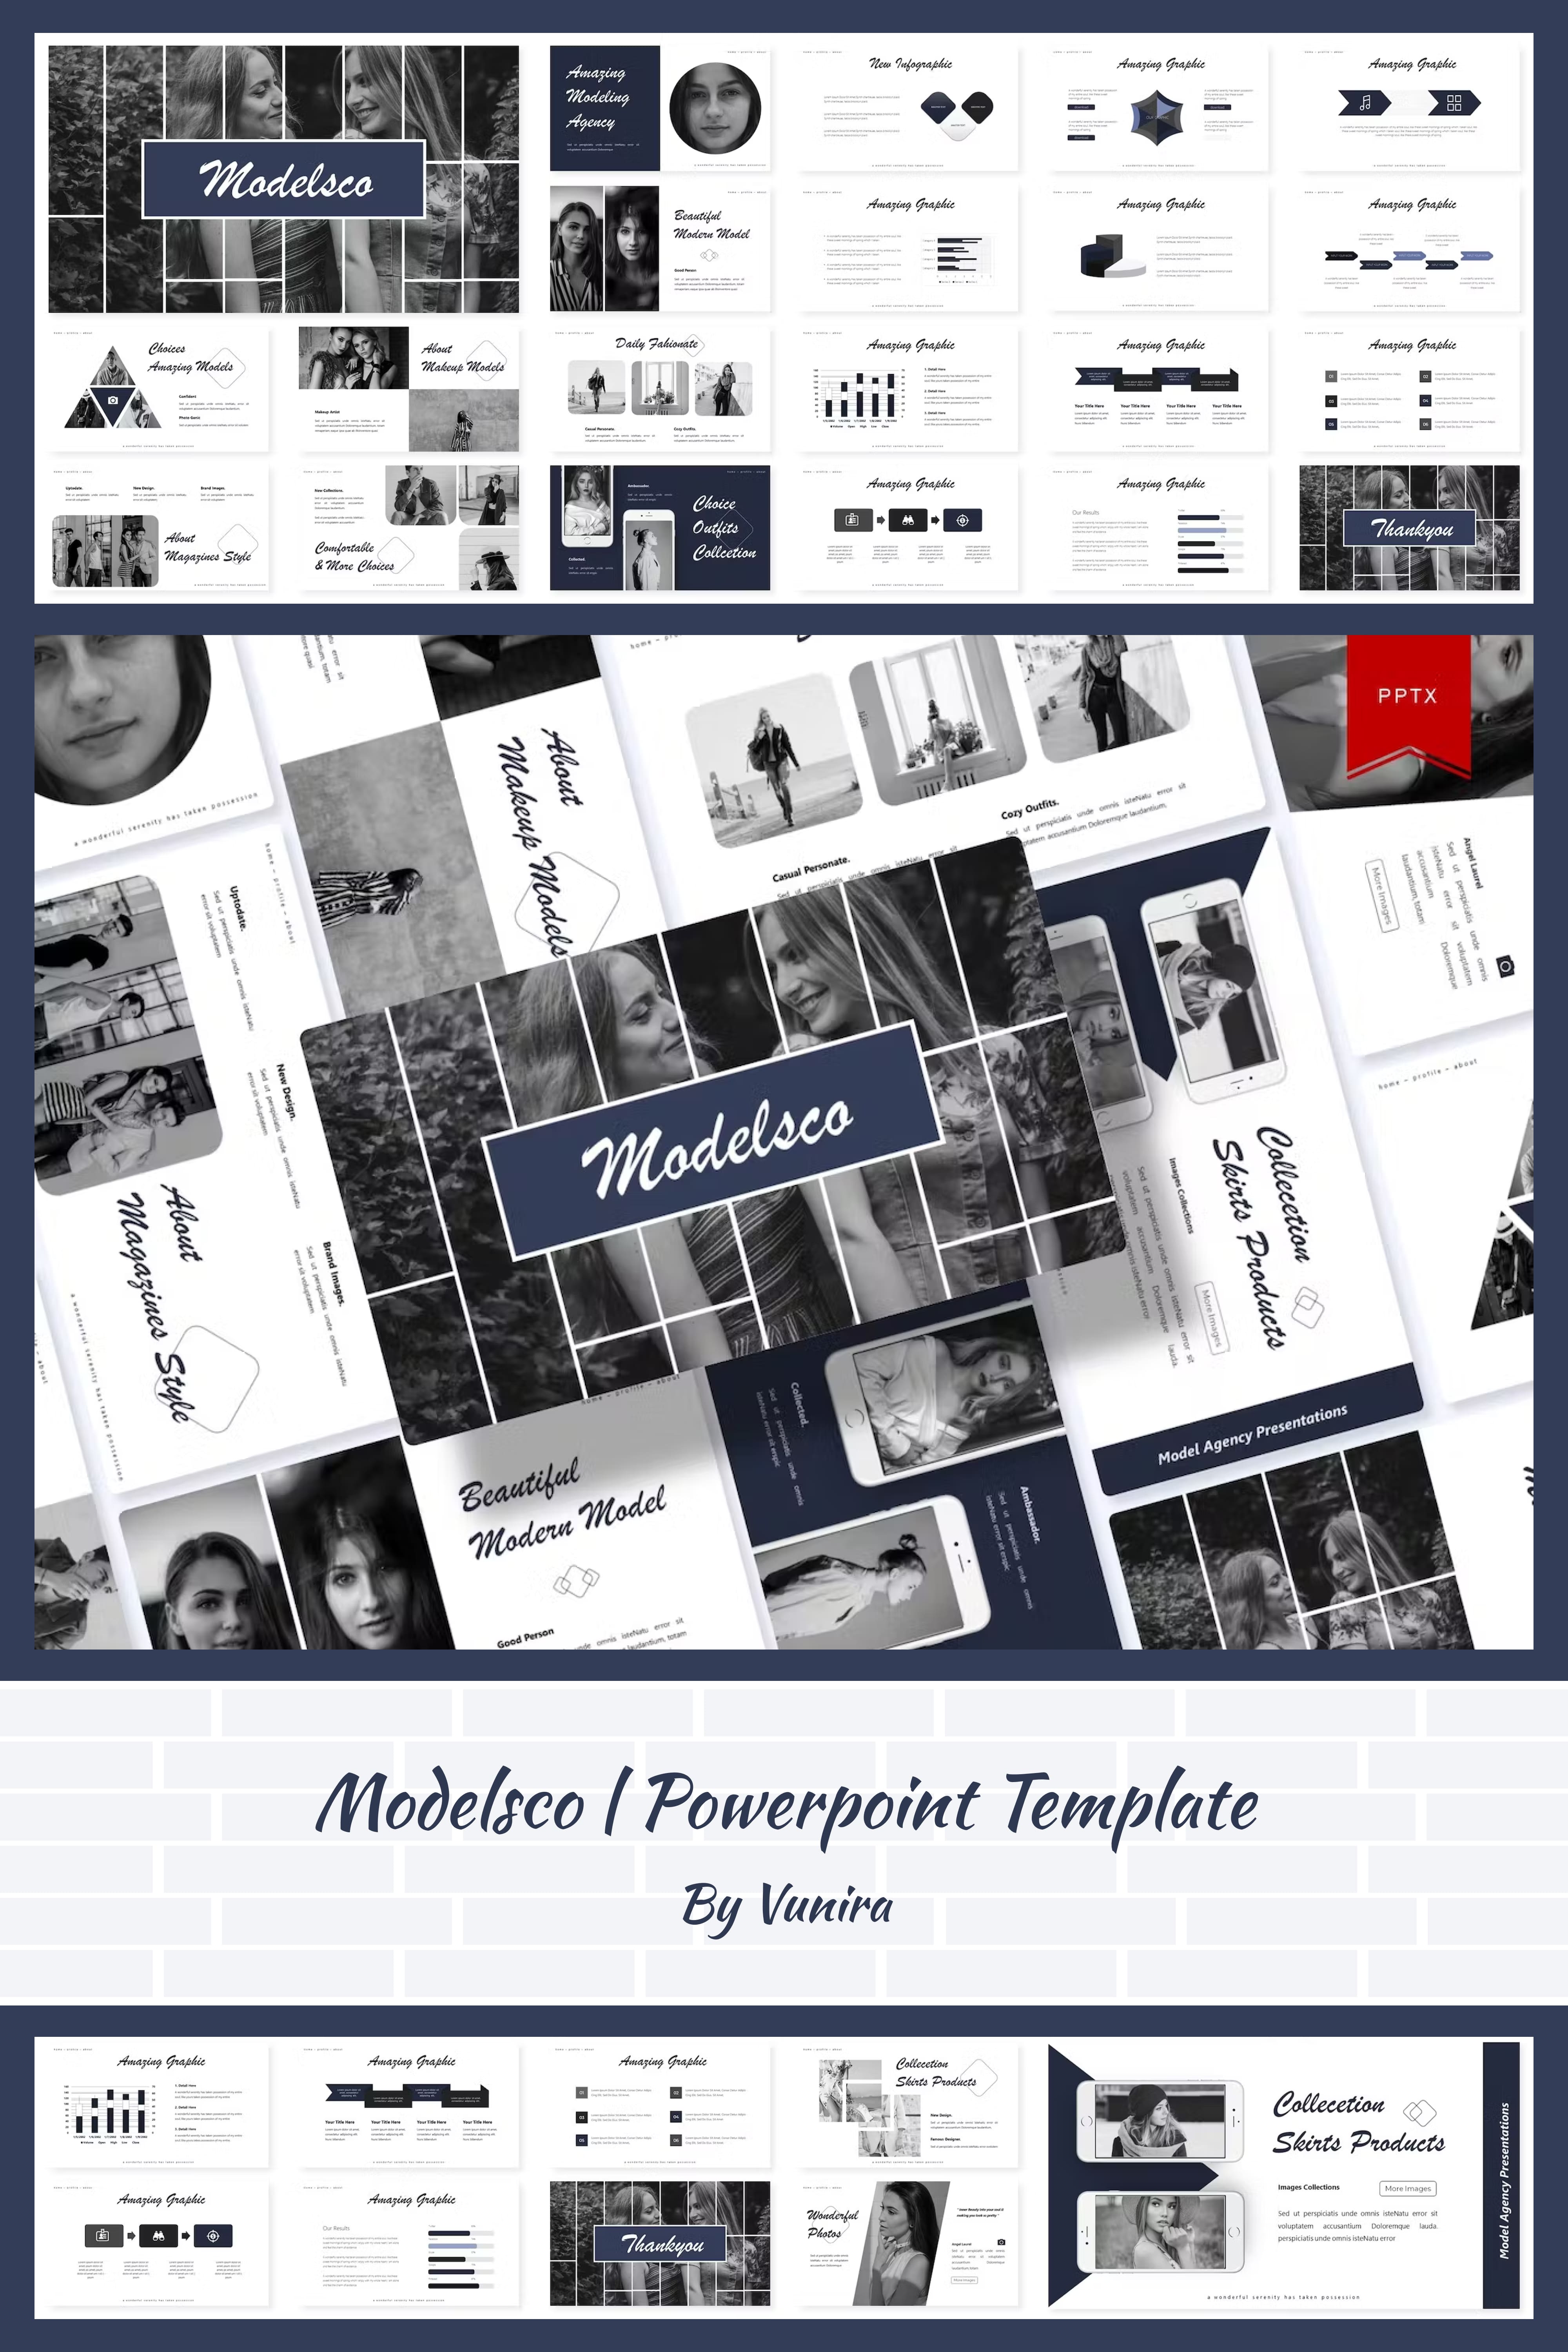 Modelsco | Powerpoint Template - Pinterest.